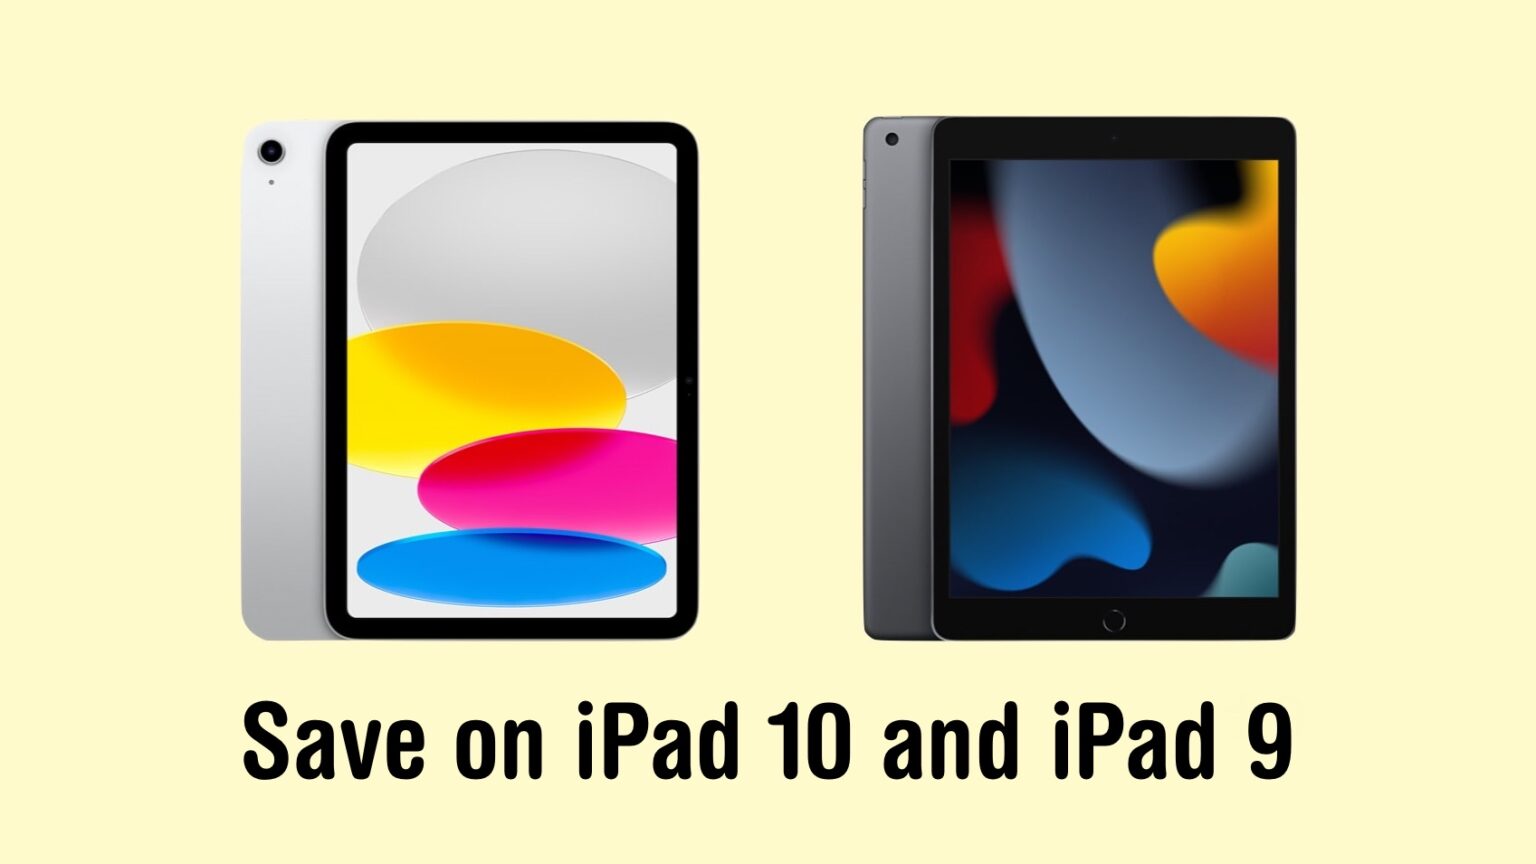 iPad 10 and iPad 9 savings